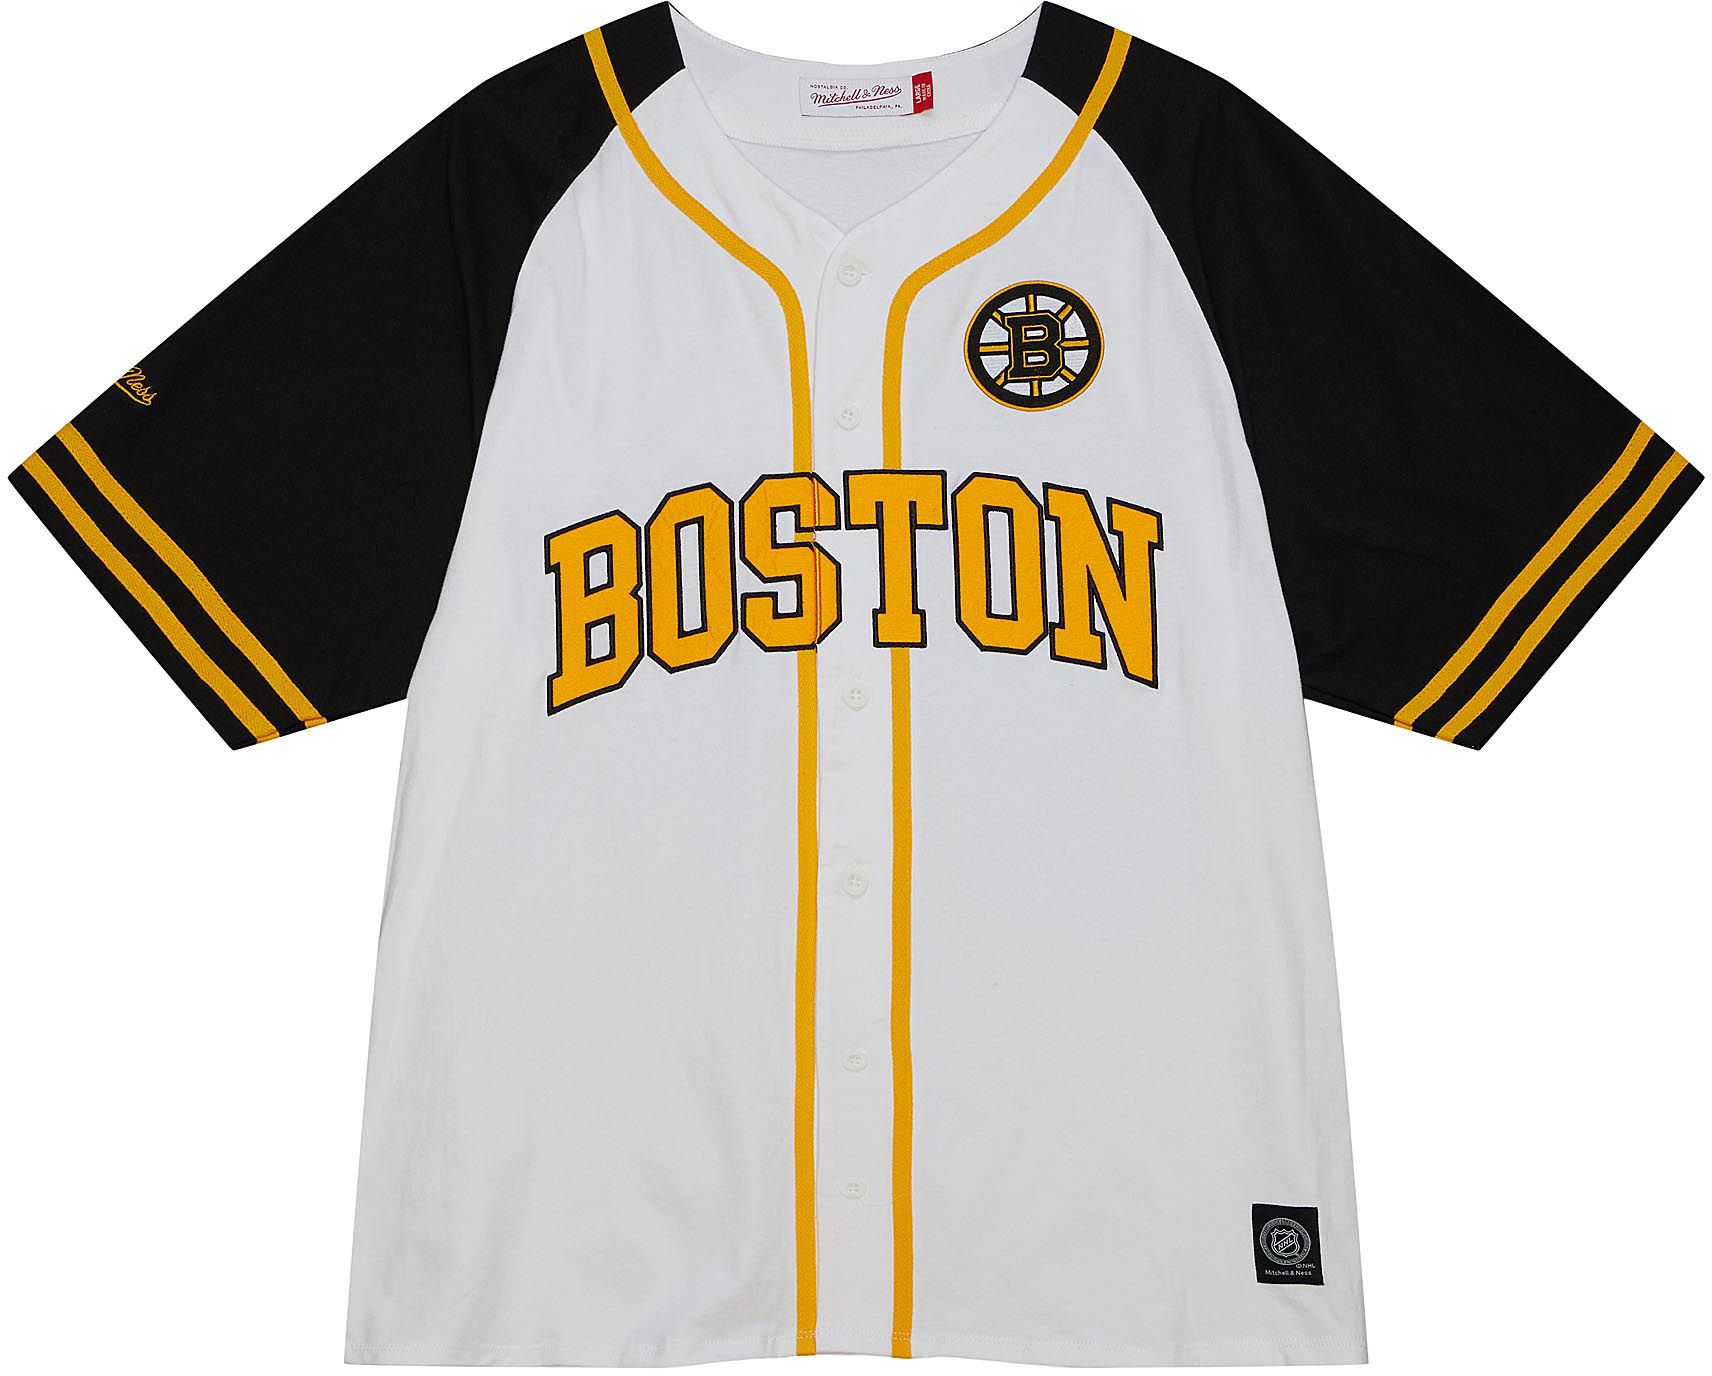 boston bruins white jersey